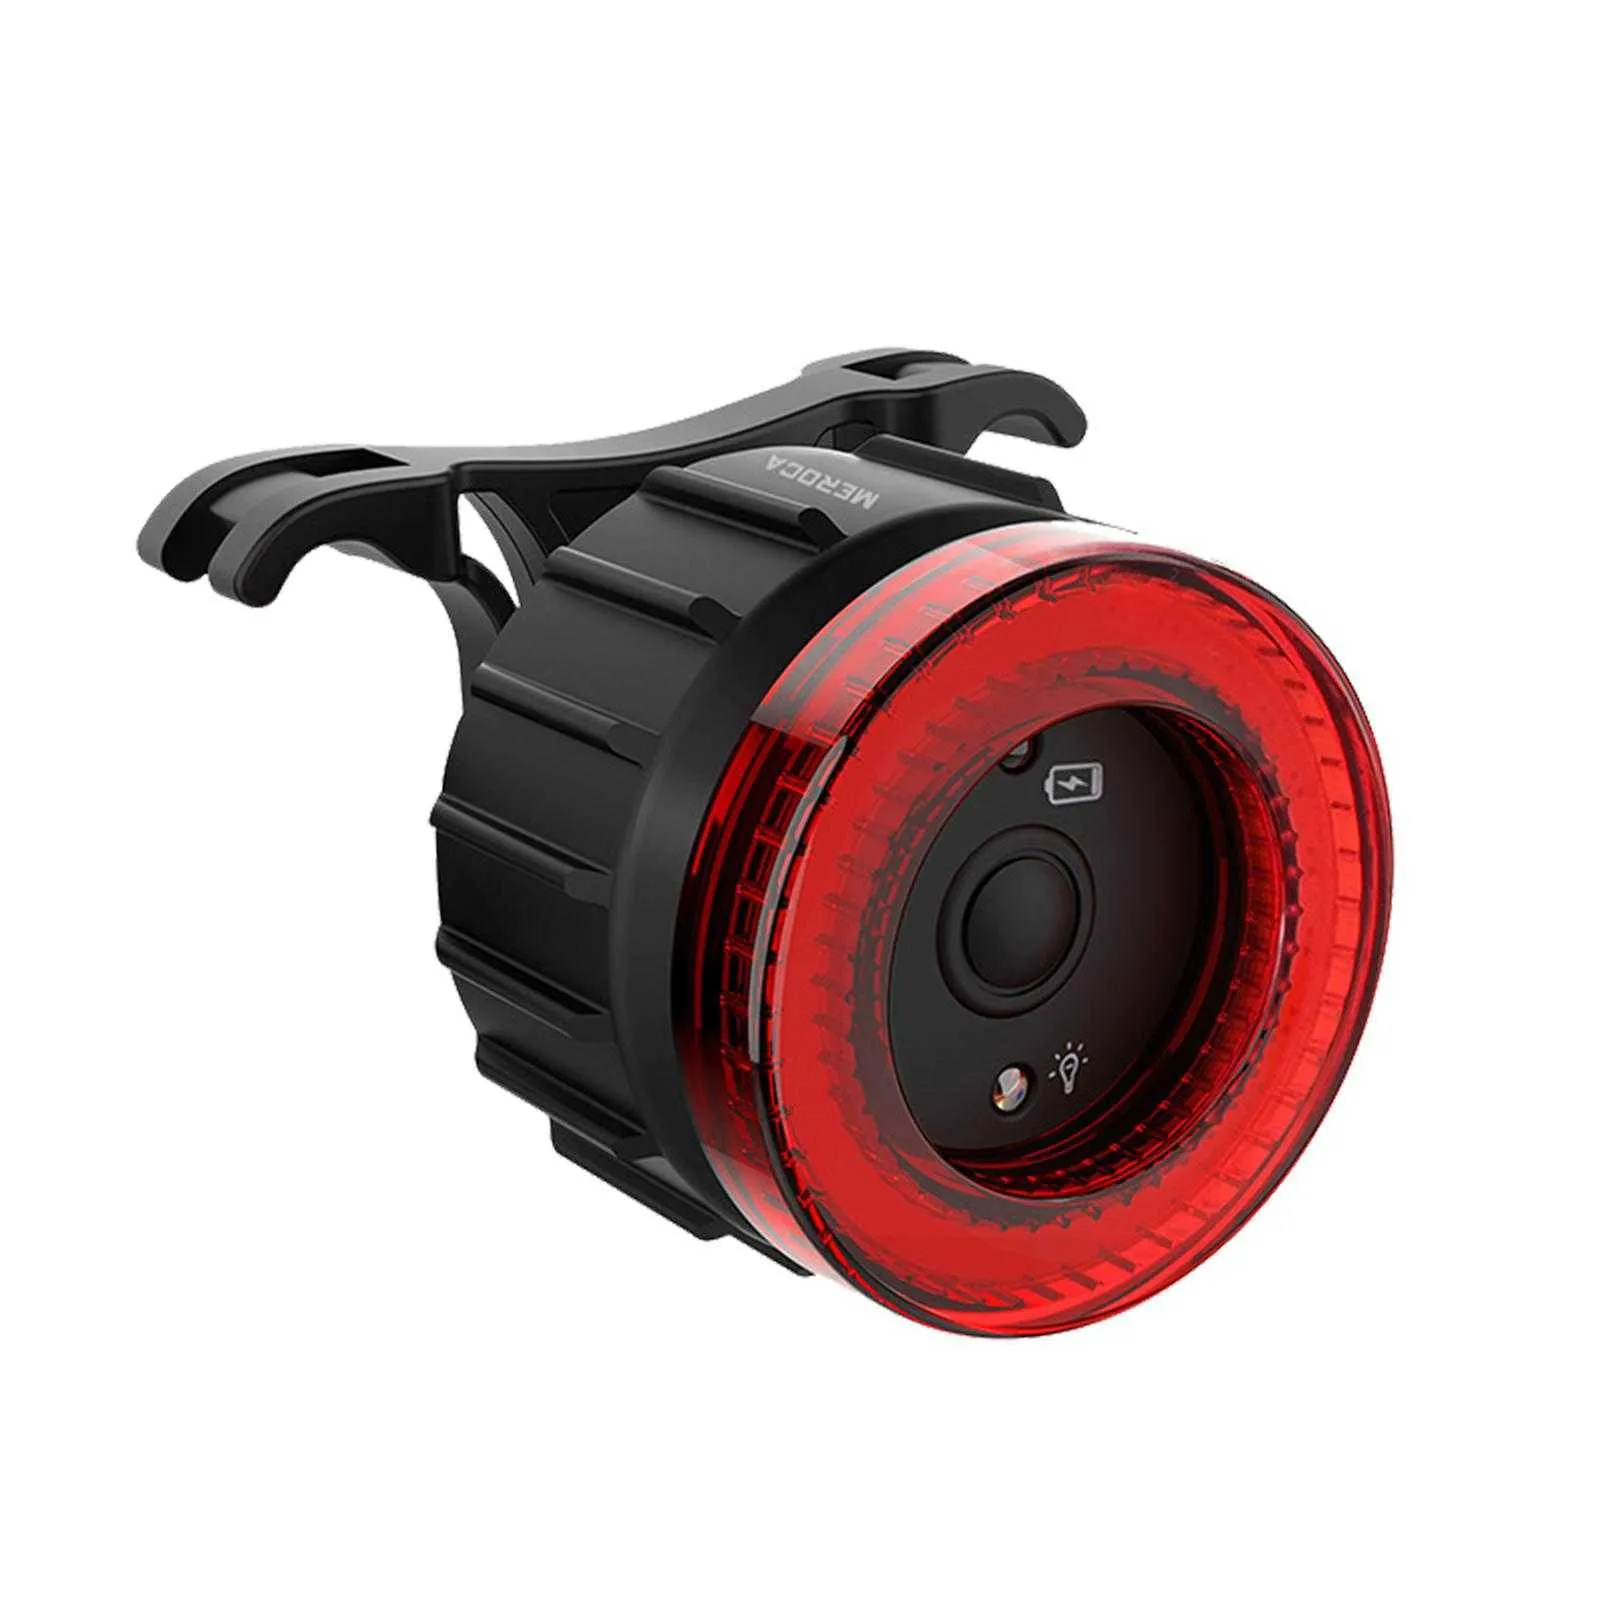 Bike Rear Light Smart Brake Sensing Auto Start&Stop USB Rechargeable 6 Modes